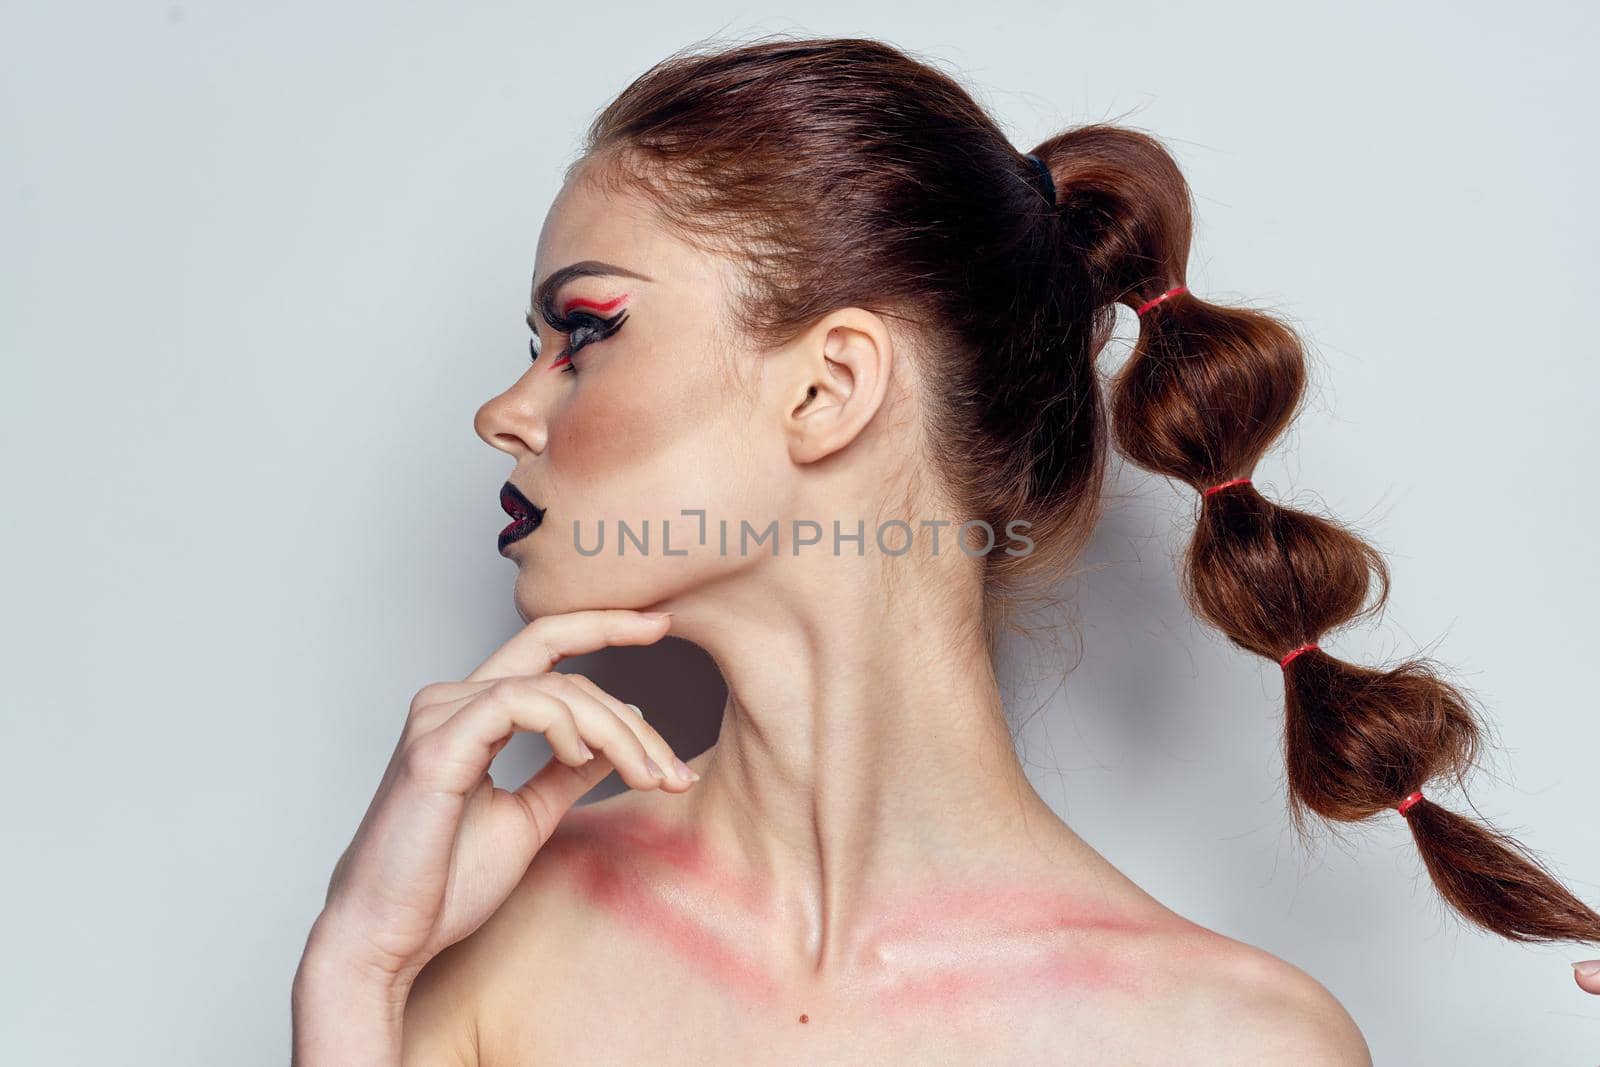 beautiful woman posing scorpio sign on forehead cosmetics light background by Vichizh